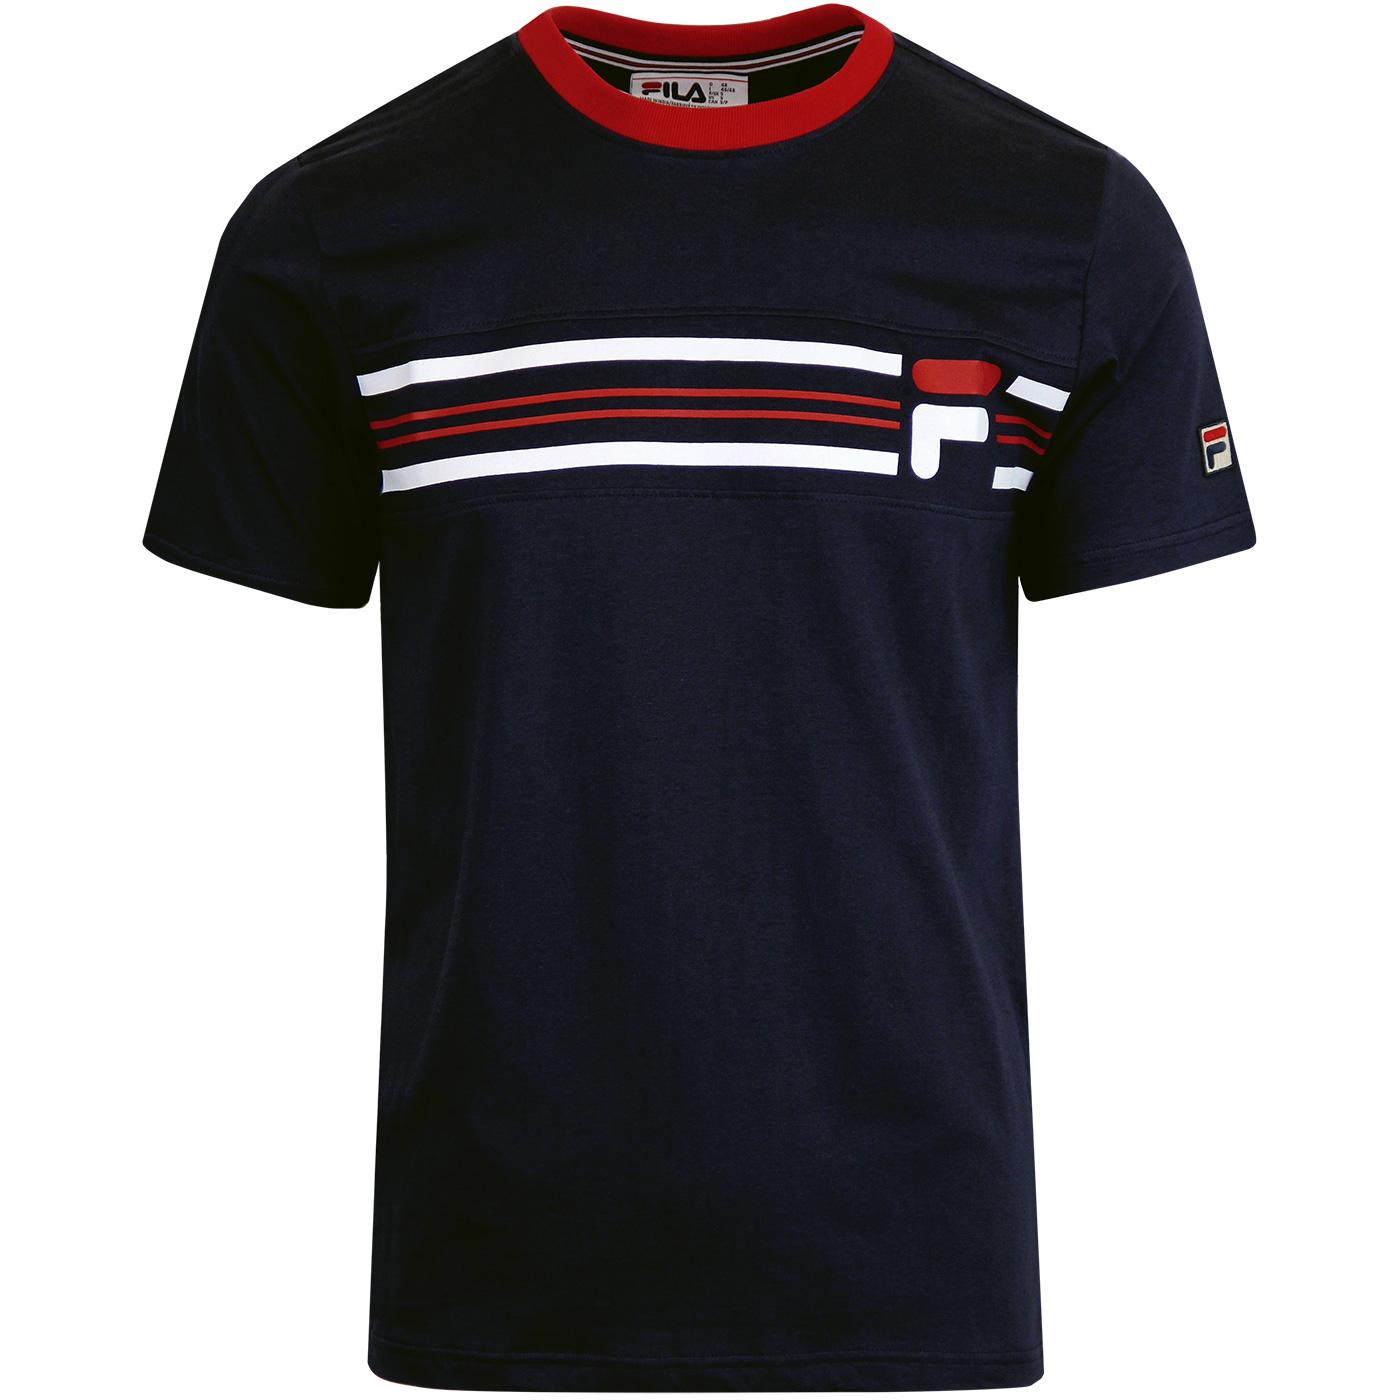 Bruno 3 FILA VINTAGE 1980s Cut & Sew T-shirt (P/R)